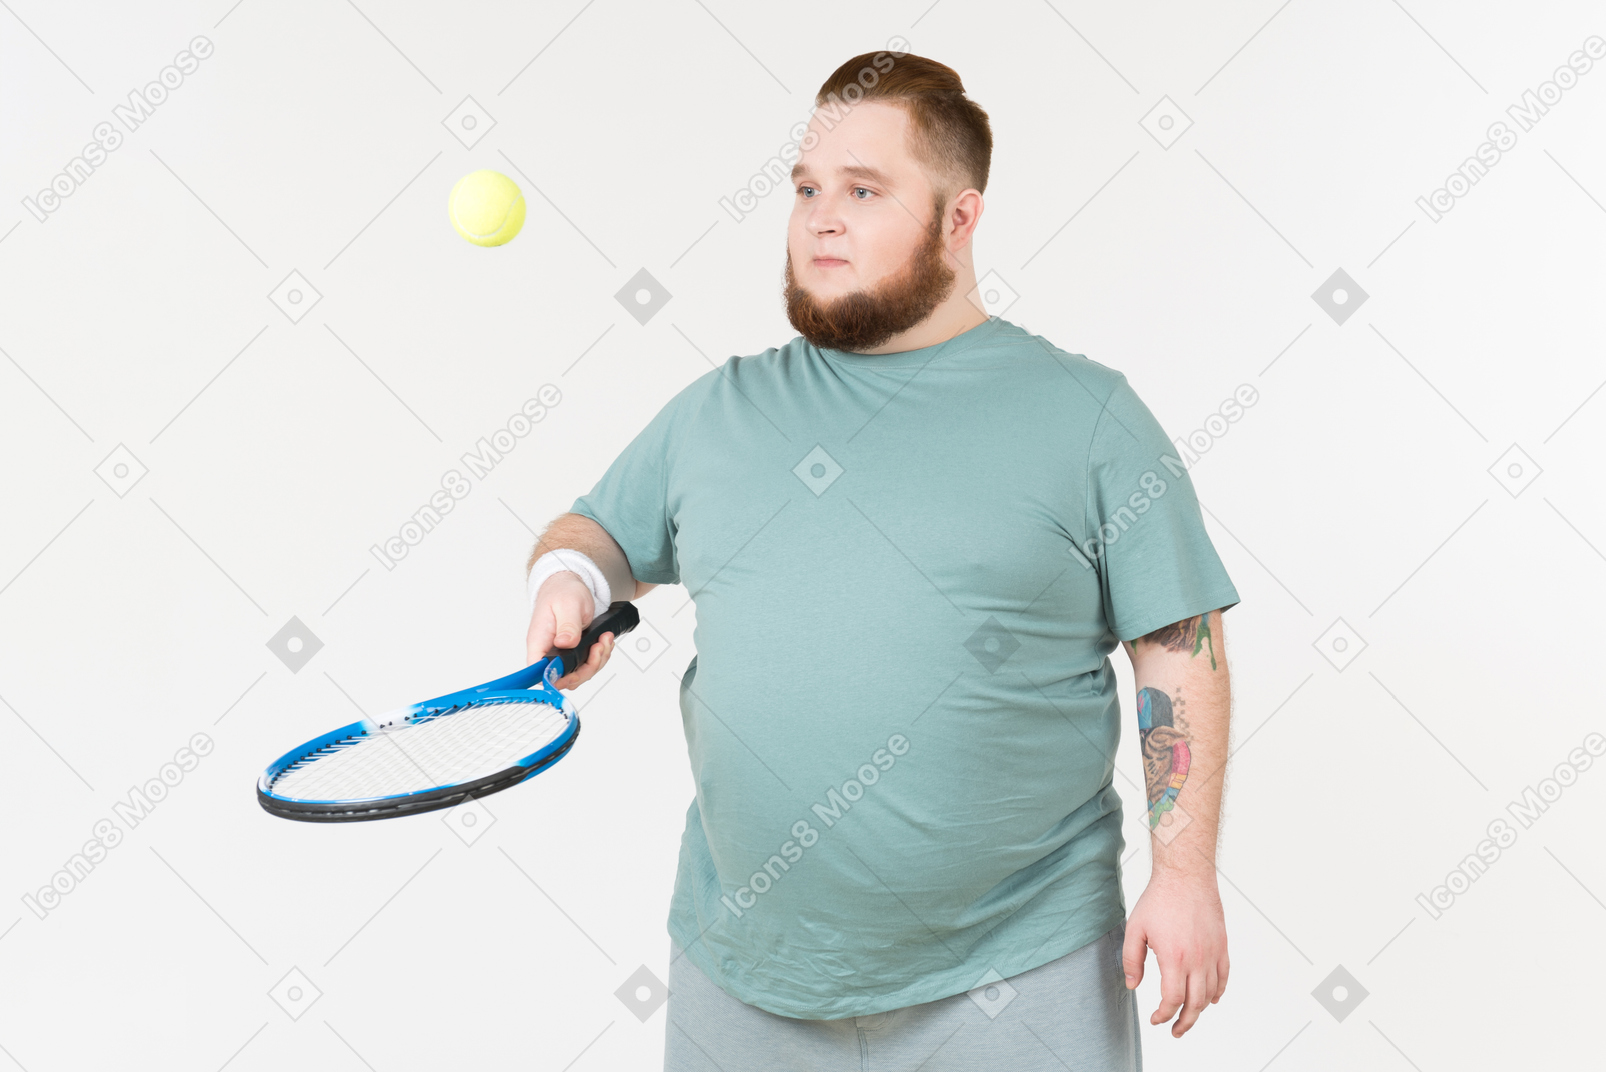 Big guy in sportswear picking tennis ball with tennis racket